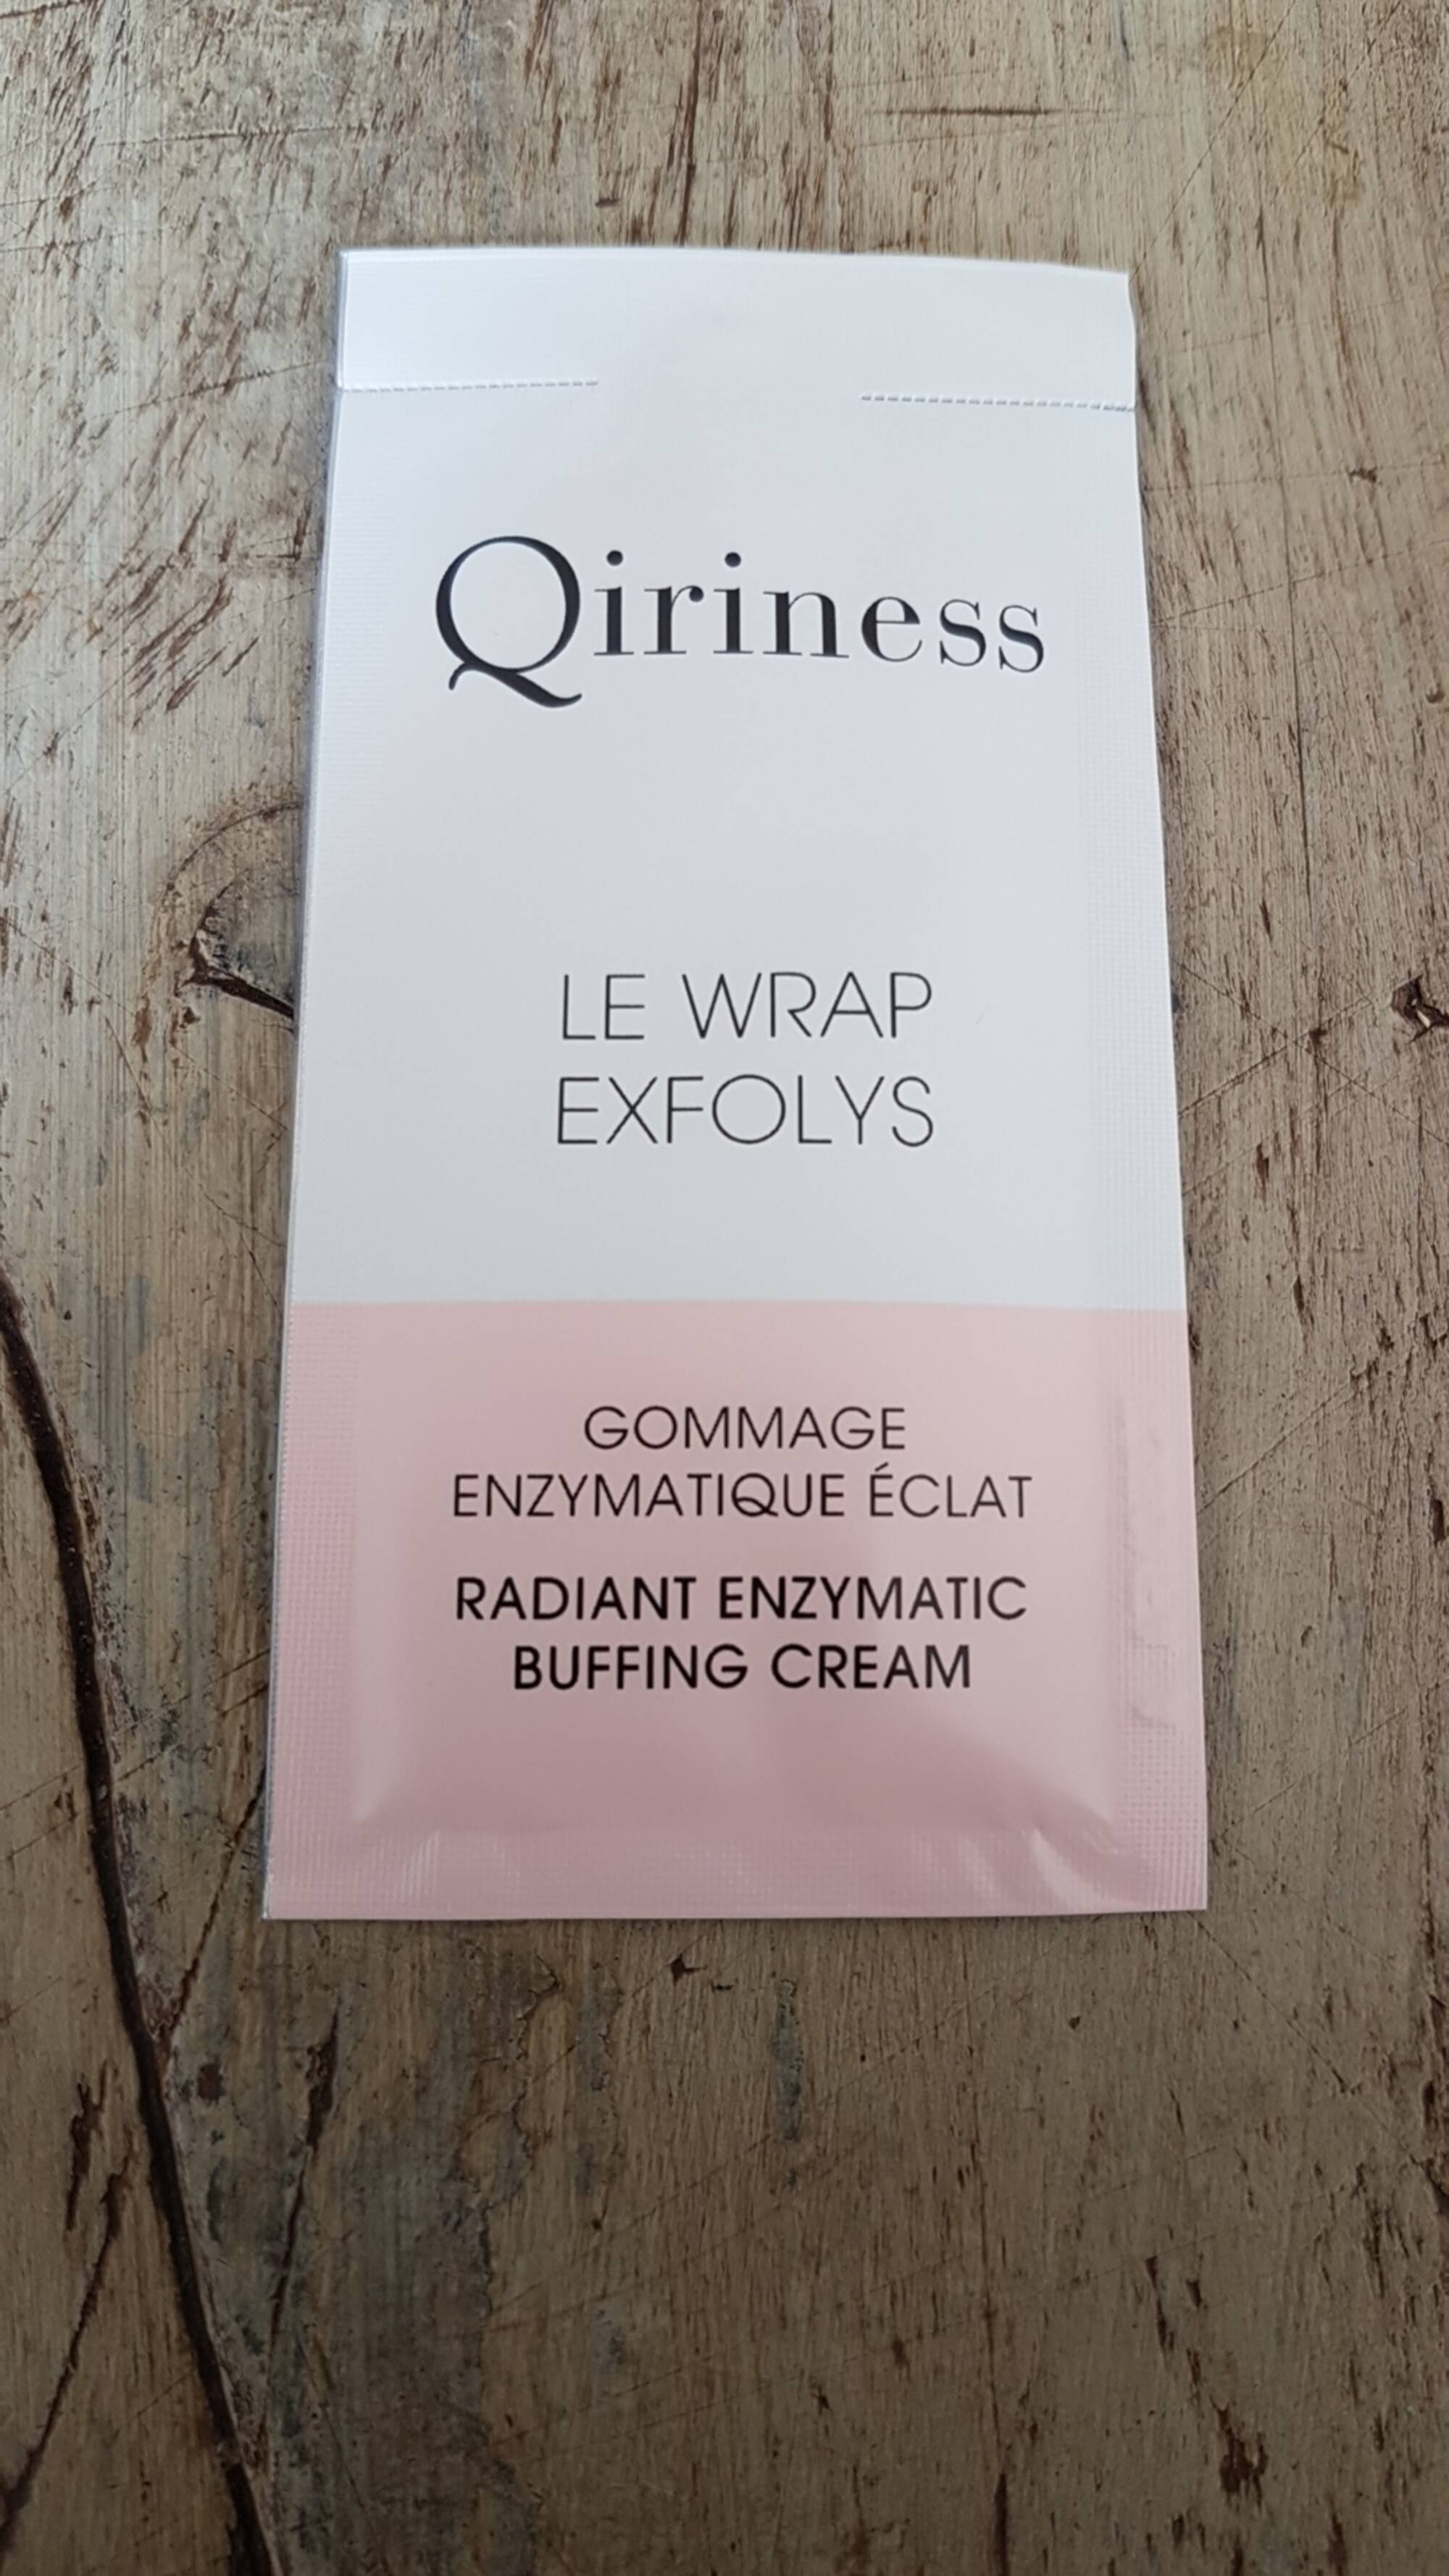 QIRINESS - Le Wrap Exfolys - Gomamge enzymatique éclat